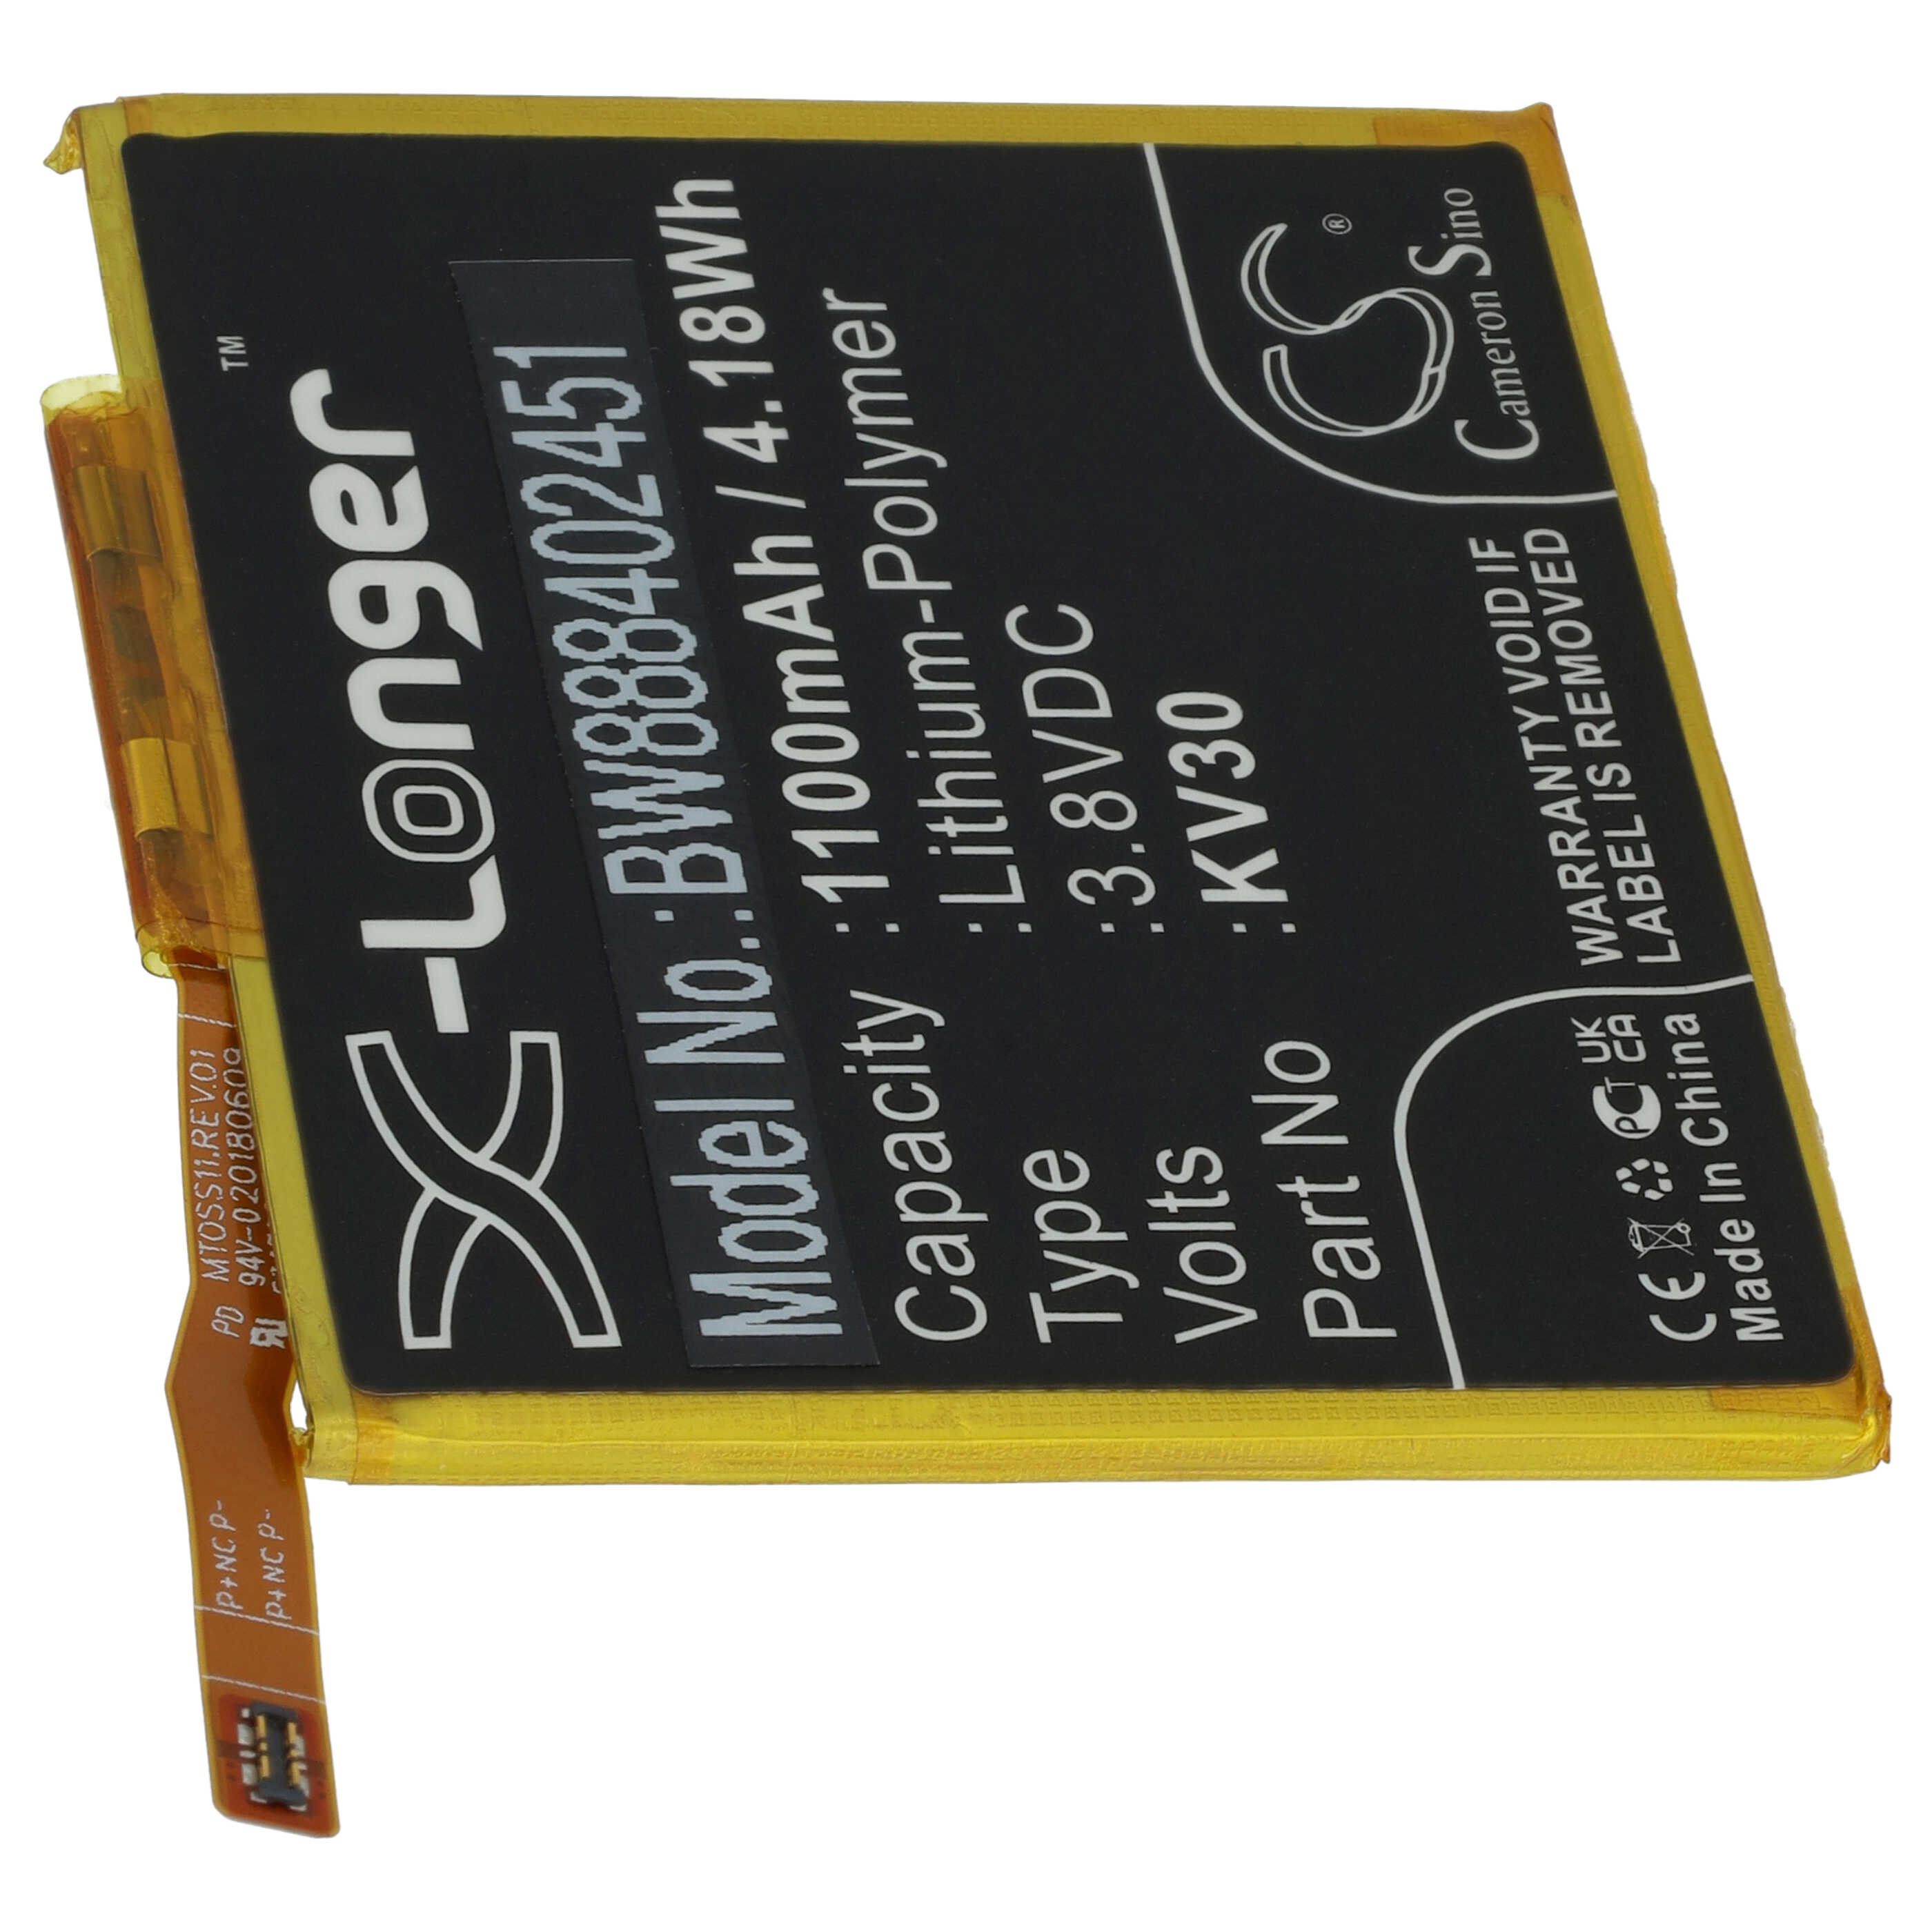 Mobile Phone Battery Replacement for Motorola KV30, SB18C40007 - 1100mAh 3.8V Li-polymer